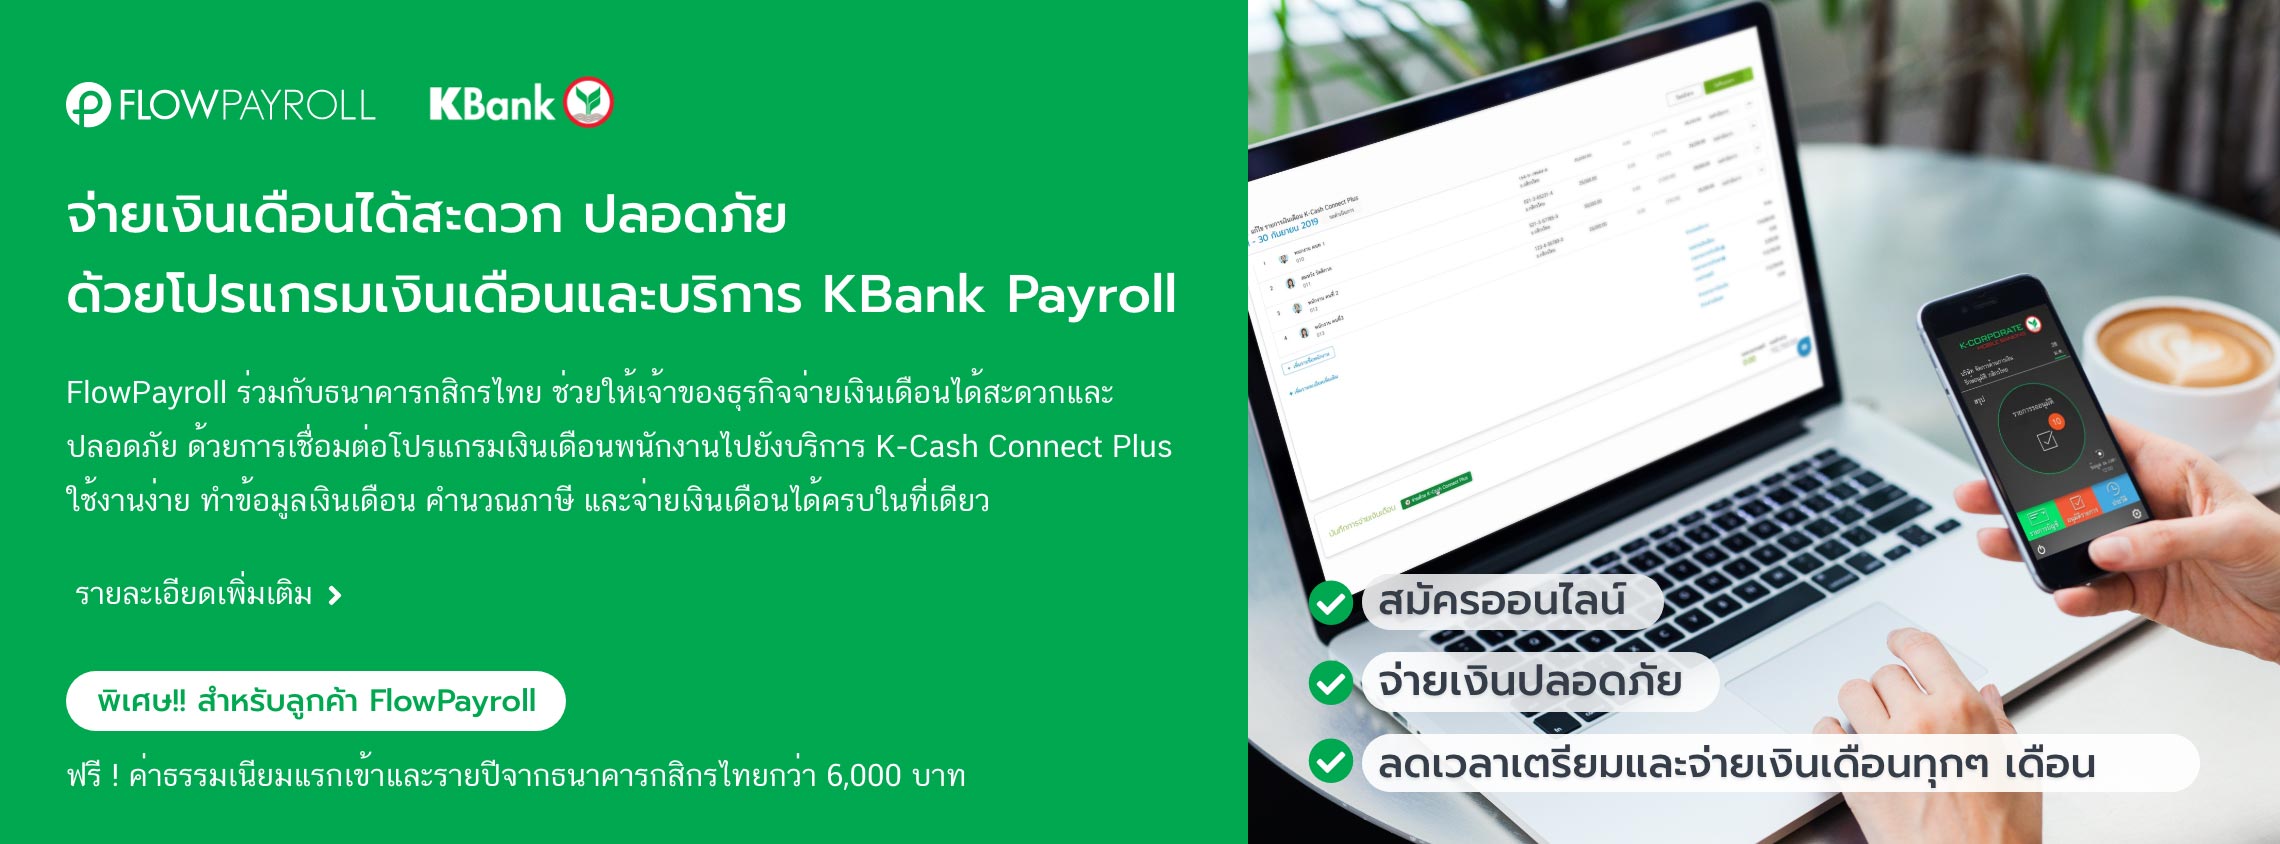 KBank Payroll